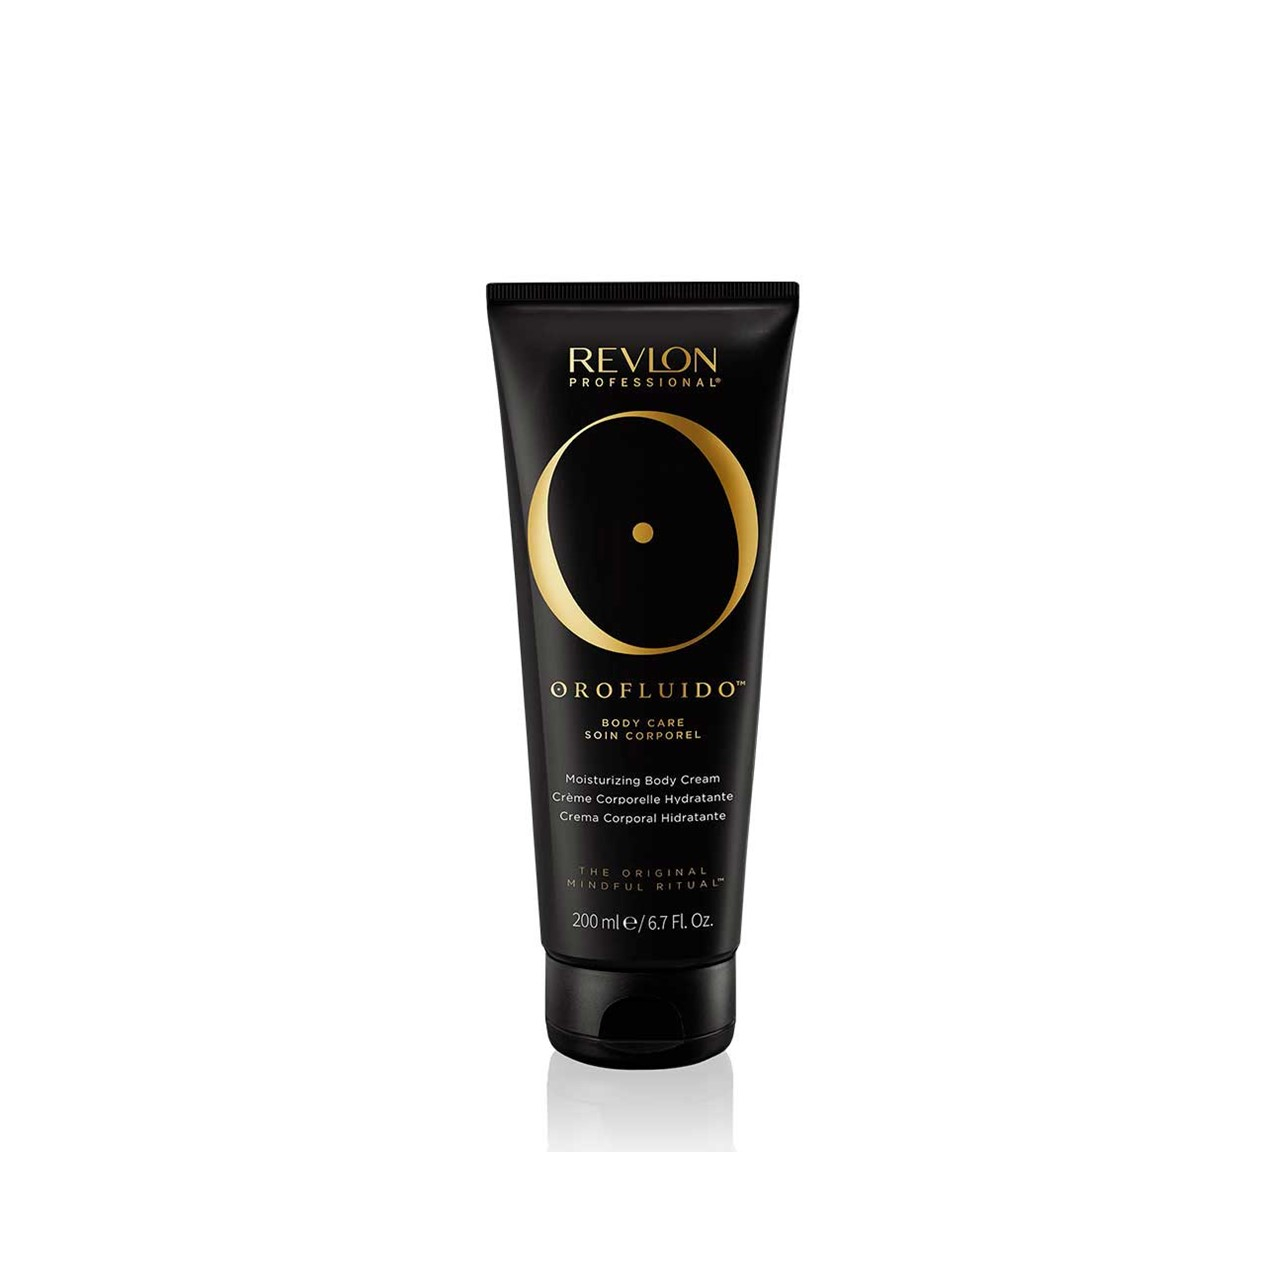 Buy Revlon Professional Orofluido Body Cream Body 200ml USA Moisturizing · Care (6.76fl oz)